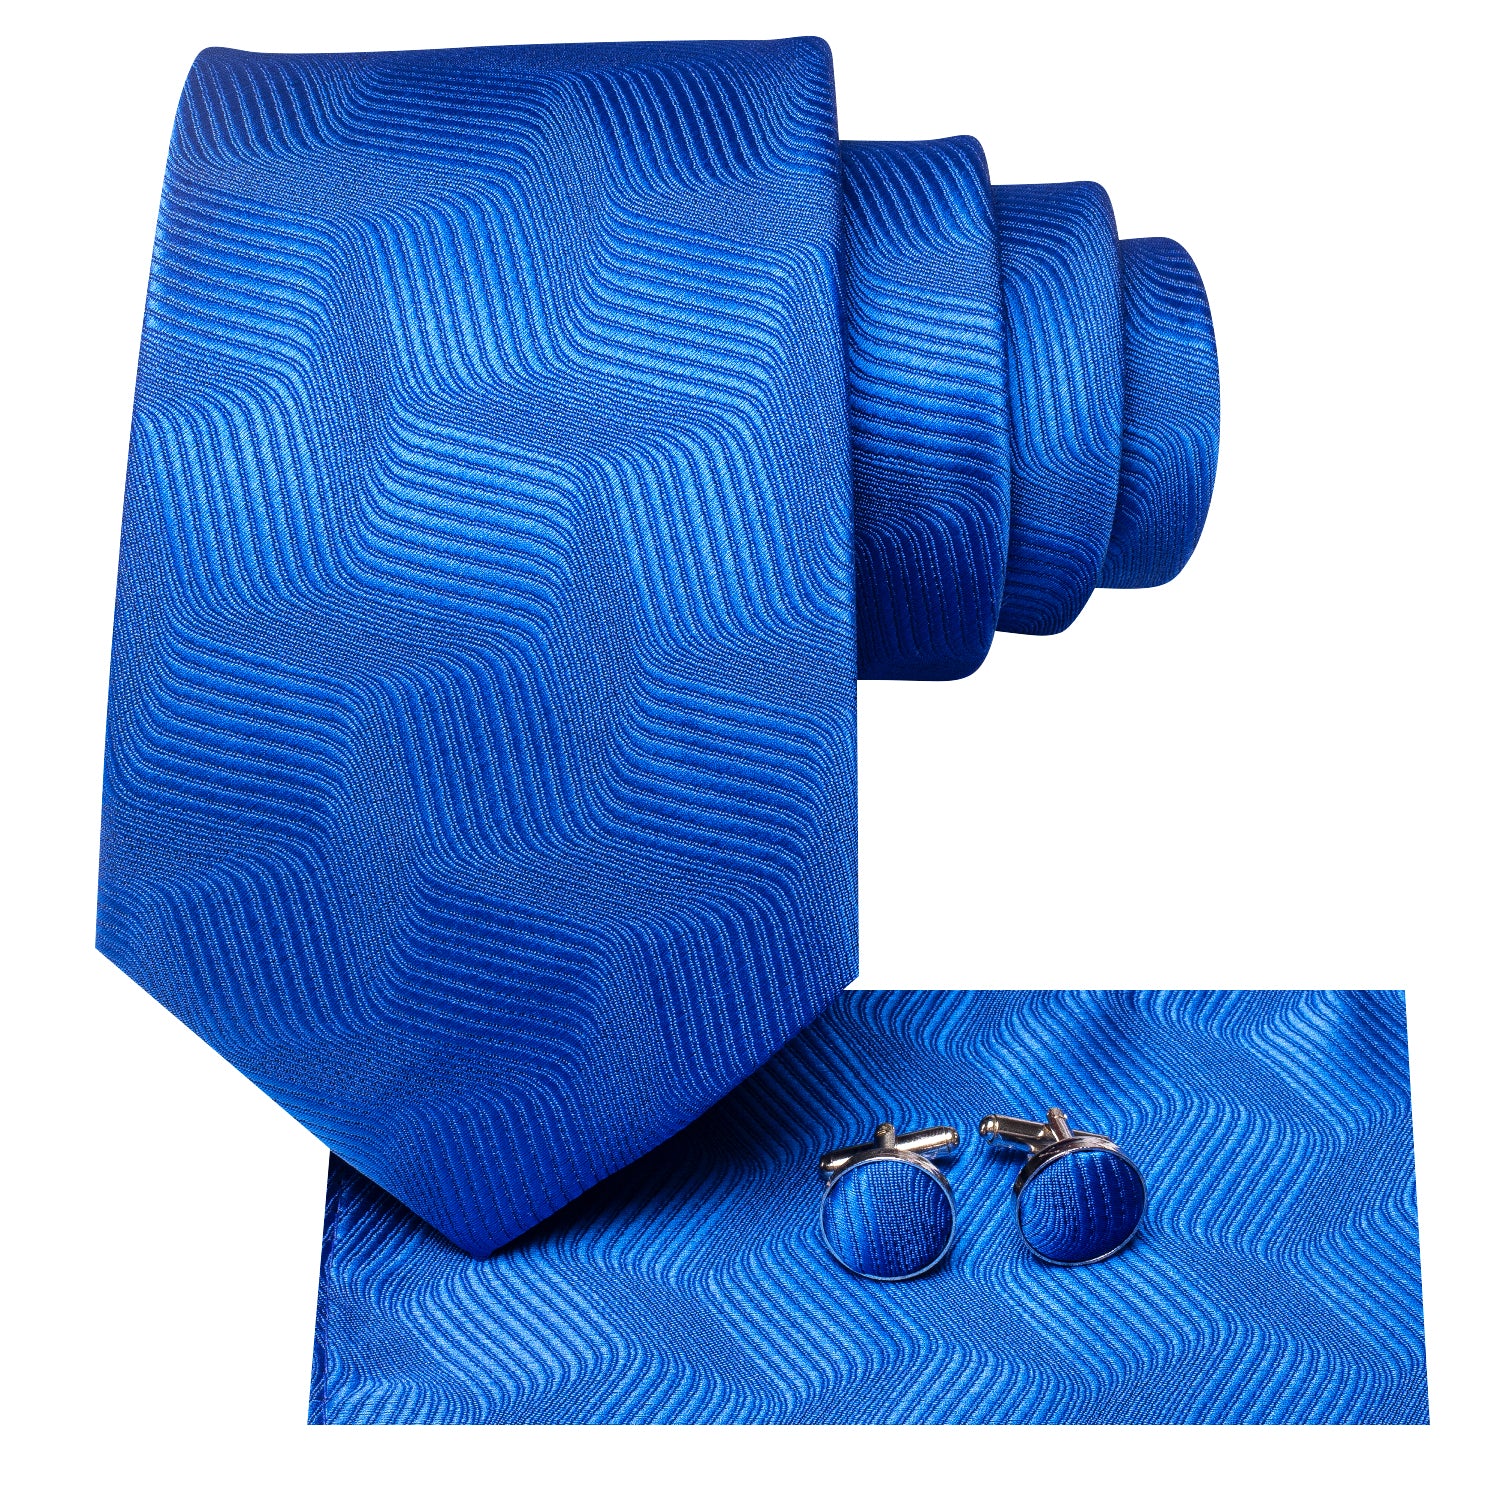 New Royal Blue Strip Novelty Tie Pocket Square Cufflinks Set